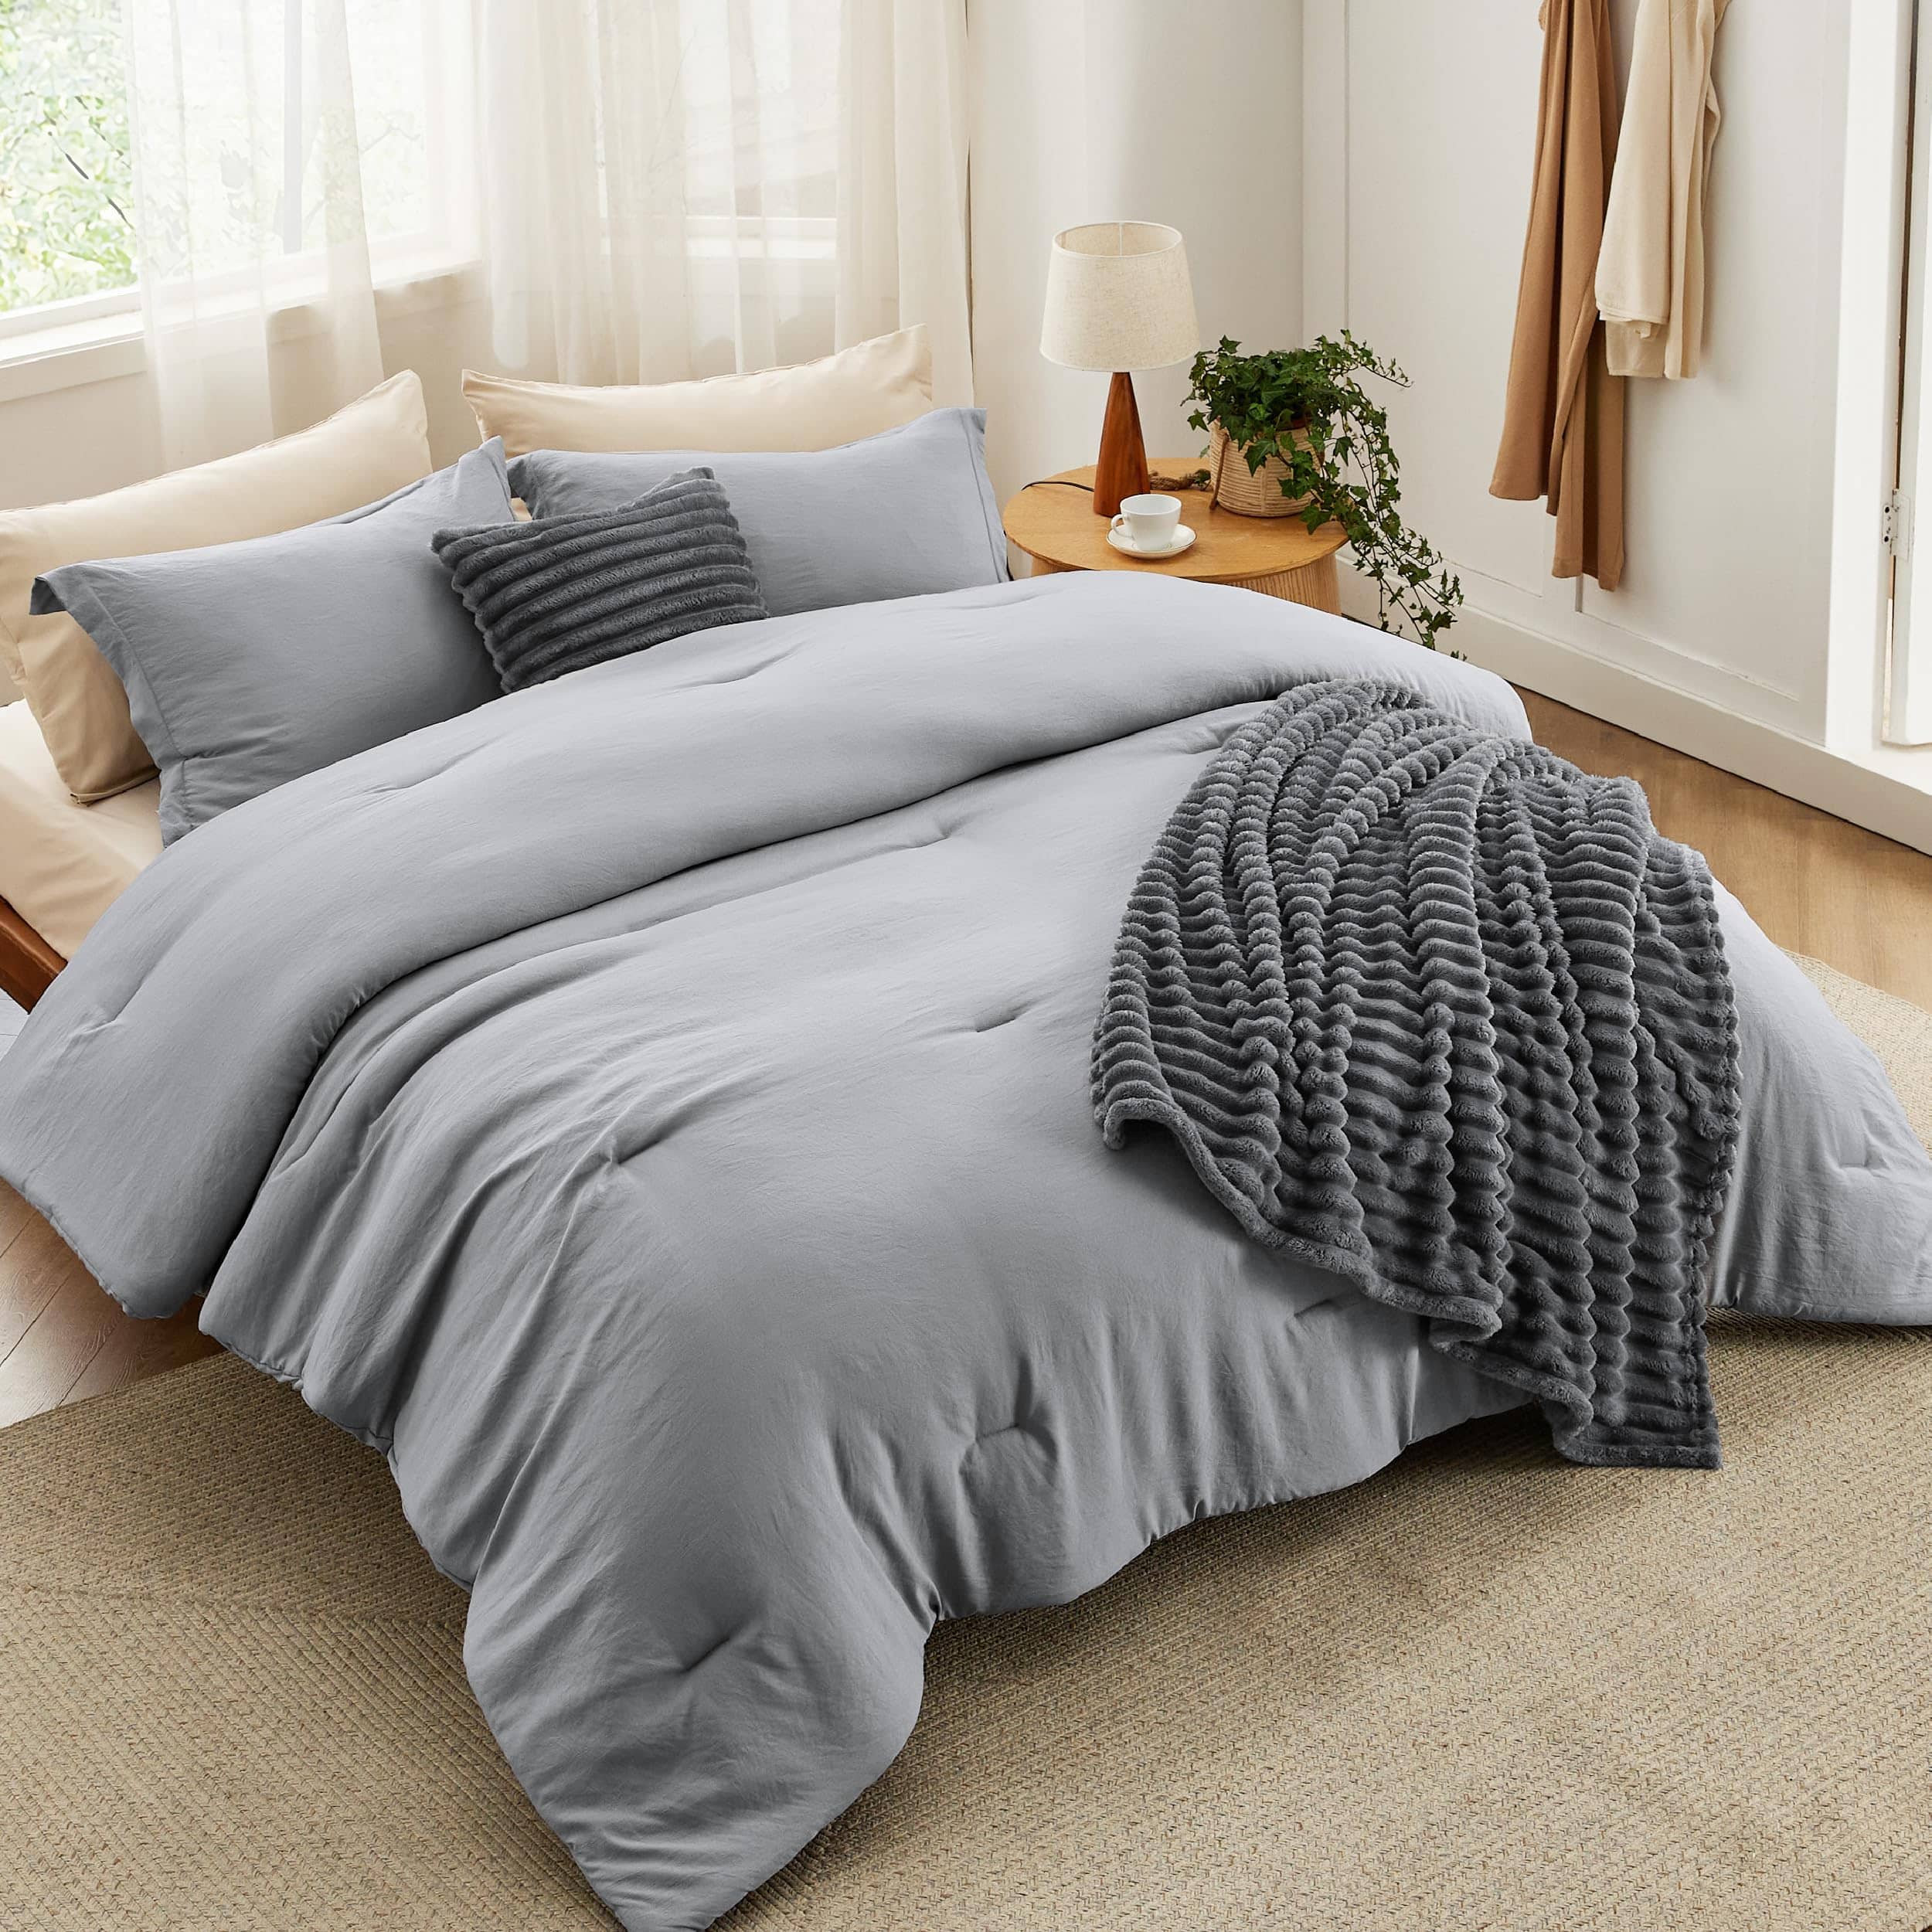 Striped Comforter set